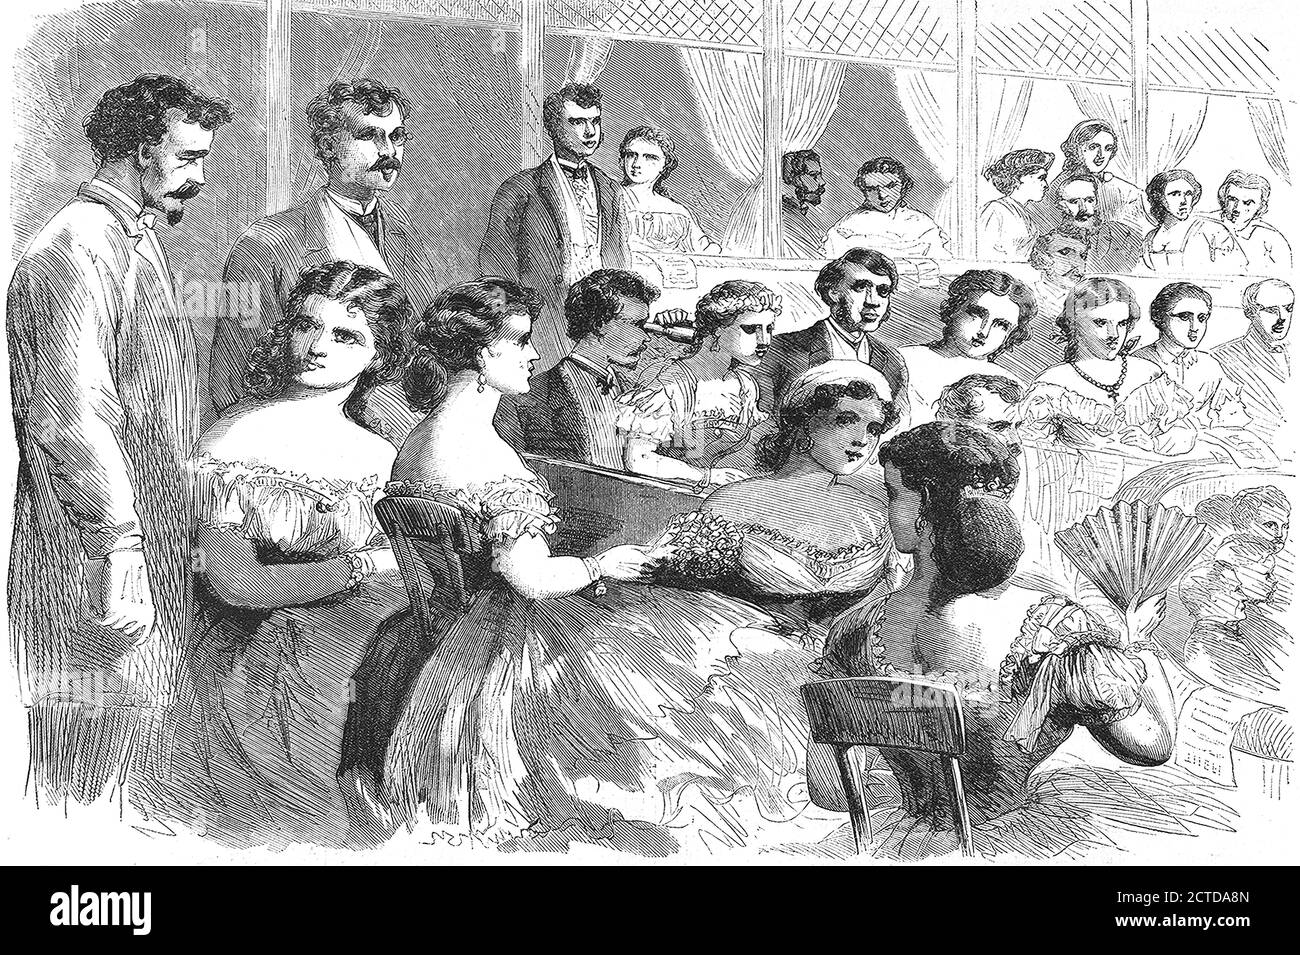 Divertimento domenicale a New Orleans - una notte creola al Teatro dell'Opera francese., immagine, stampe, 1866, Waud, Alfred R. (Alfred Rudolph) (1828-1891 Foto Stock